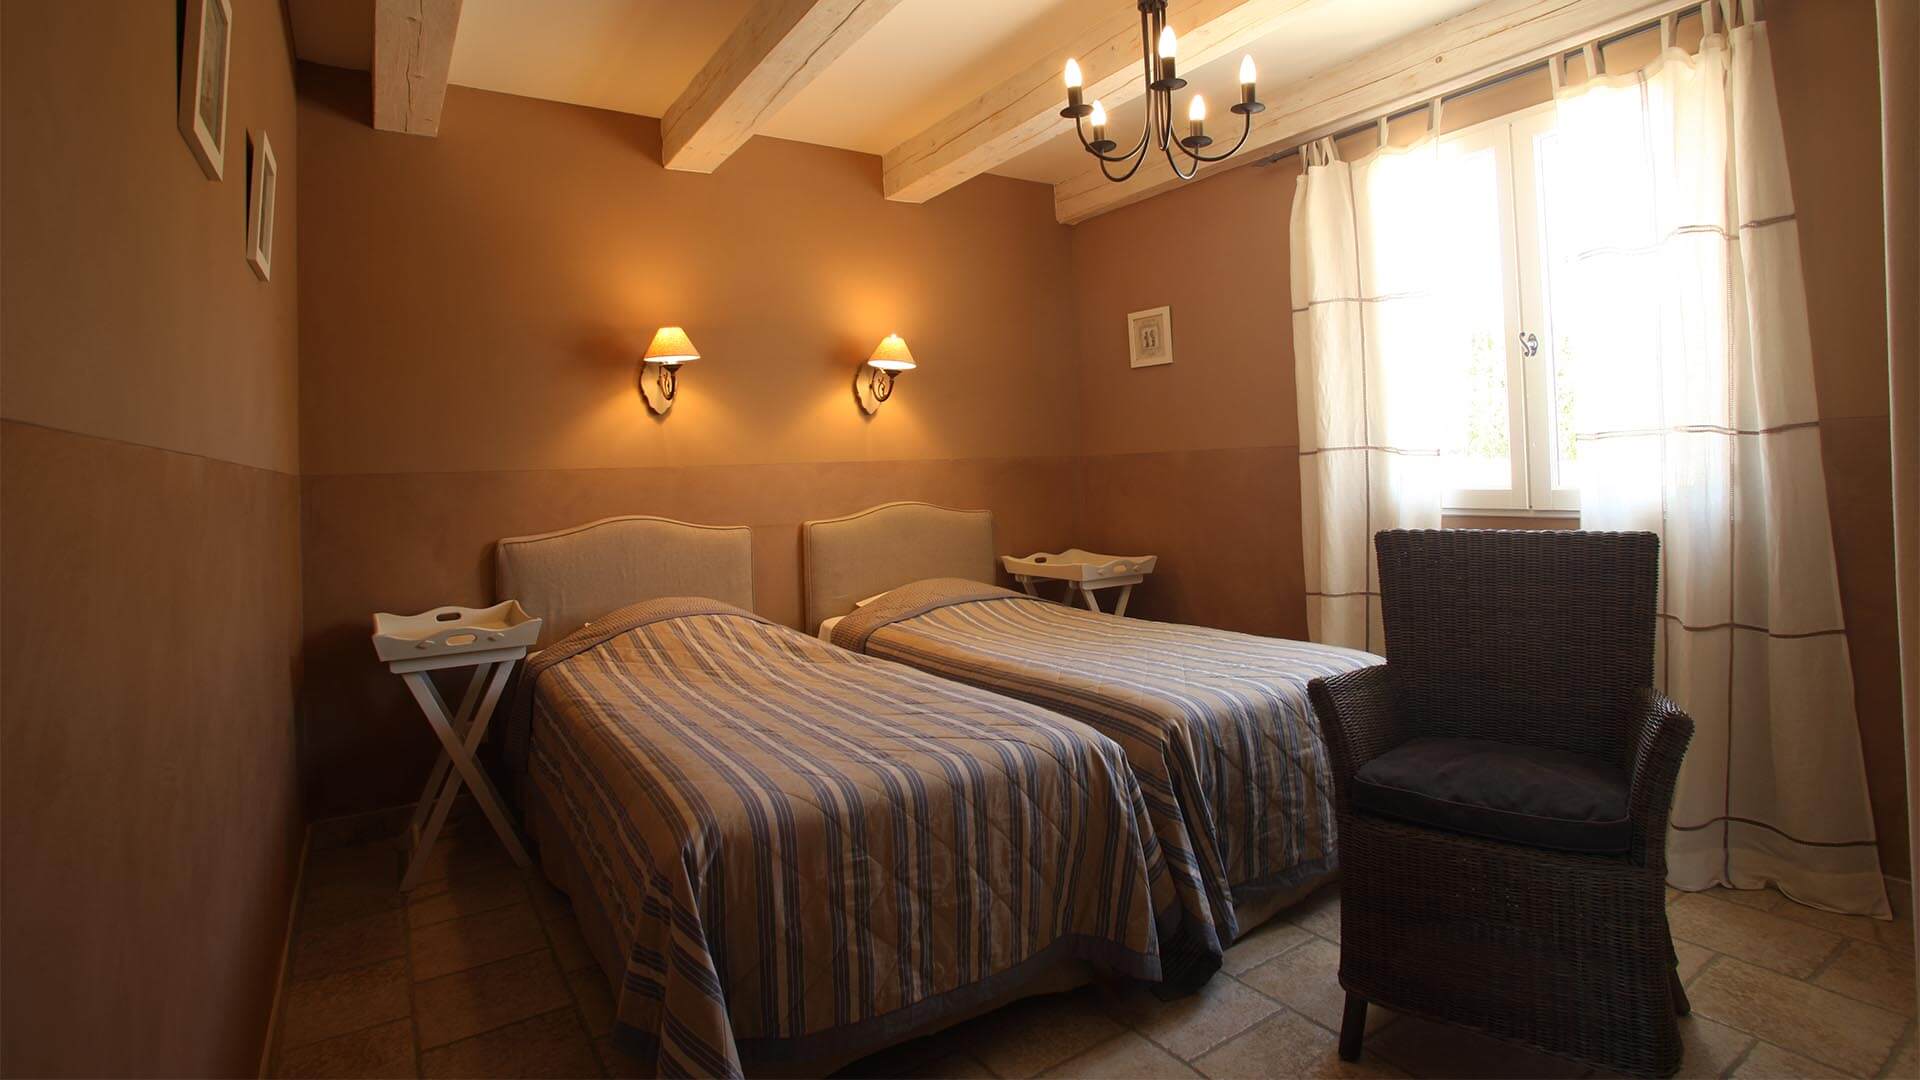 Location vacances particulier Provence | Villa terre d'ombre | Chambre deux lits simples